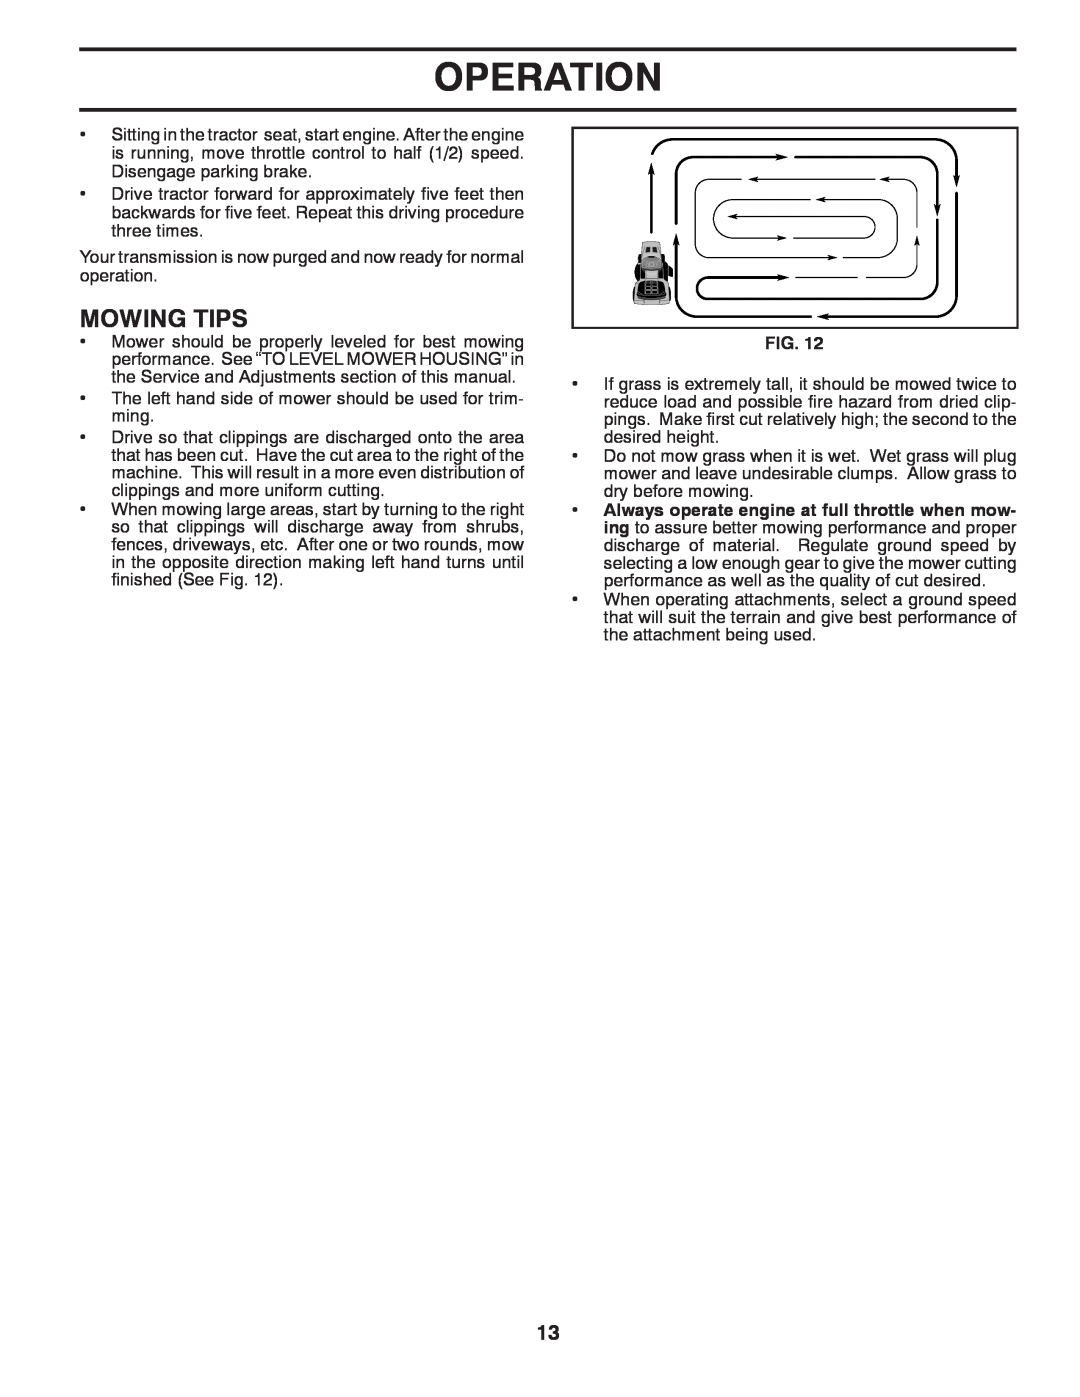 Husqvarna 2748 GLS (CA) manual Mowing Tips, Operation, Fig 